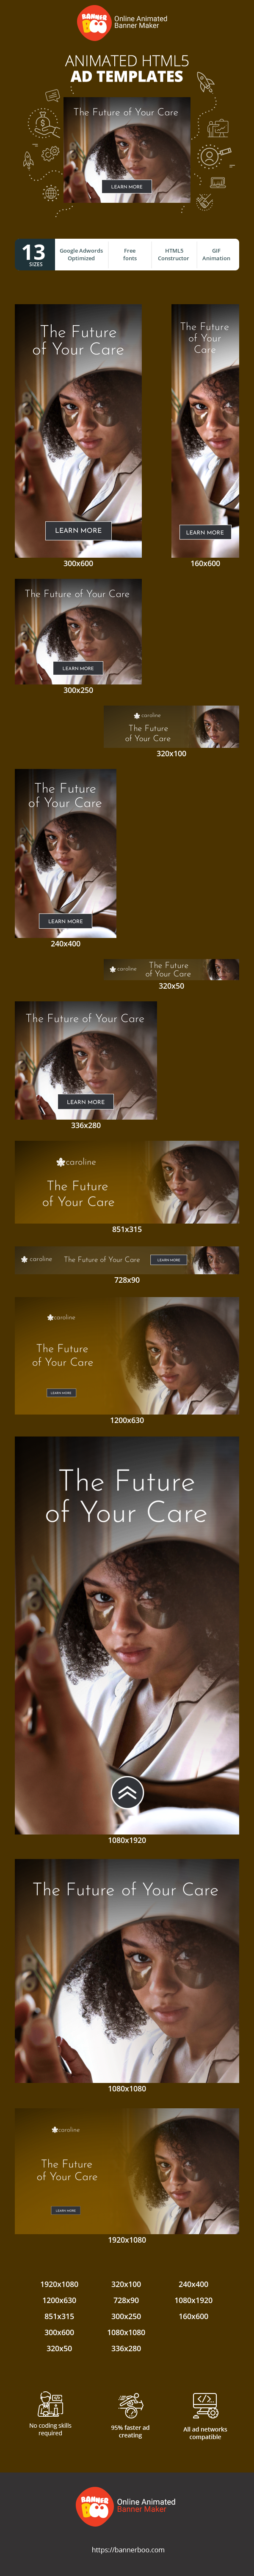 Шаблон рекламного банера — The Future Of Your Care — Spa